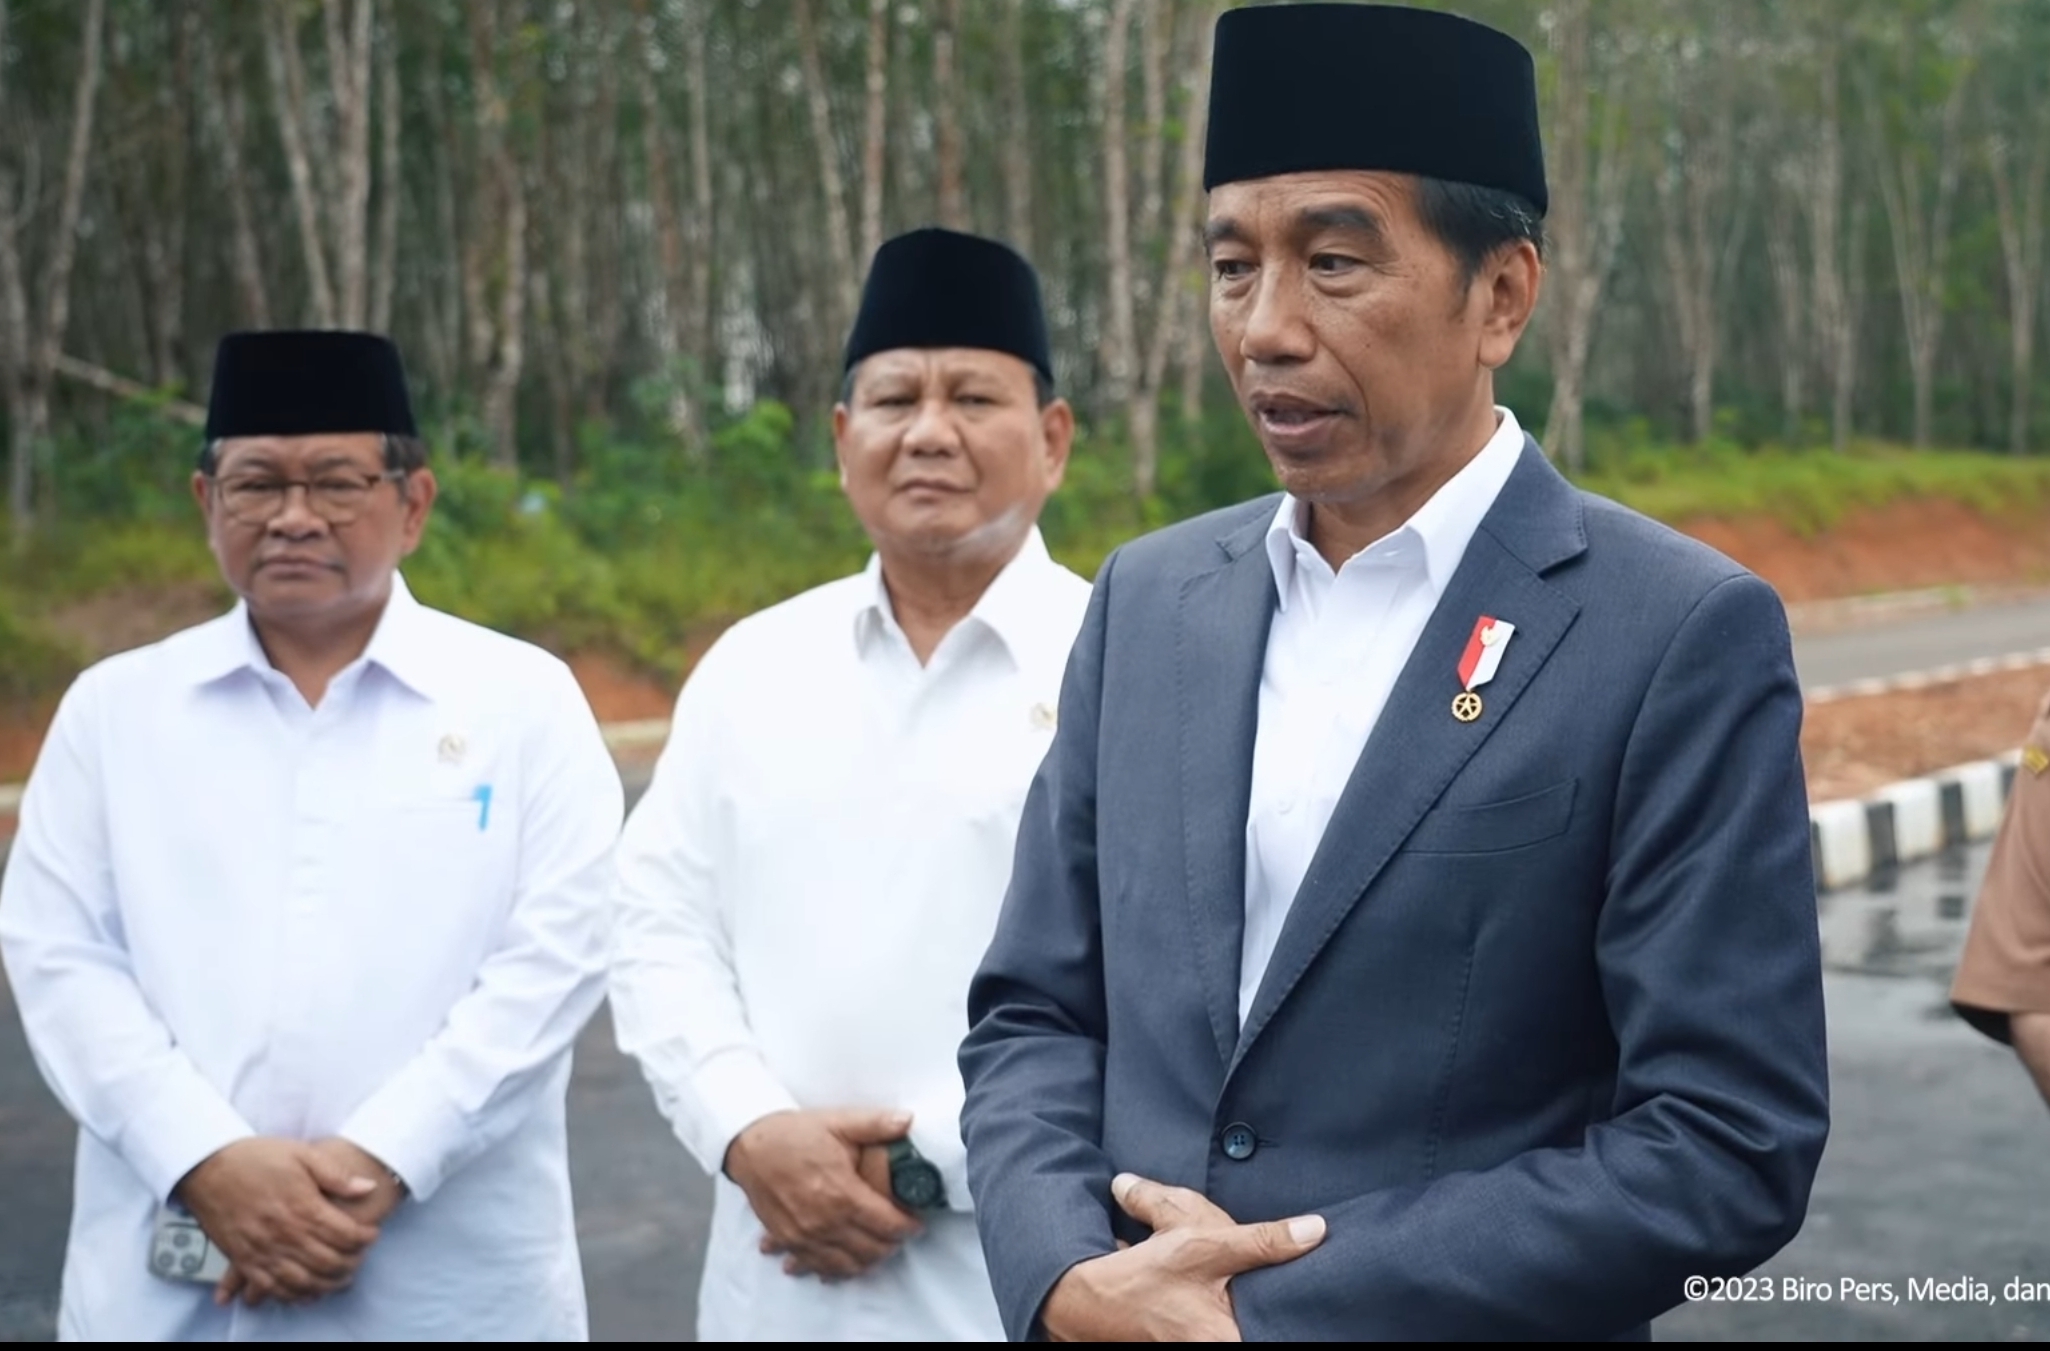 Jokowi Larang Buka Bersama bagi Pejabat dan Pegawai Pemerintahan, Siapa Dirugikan?